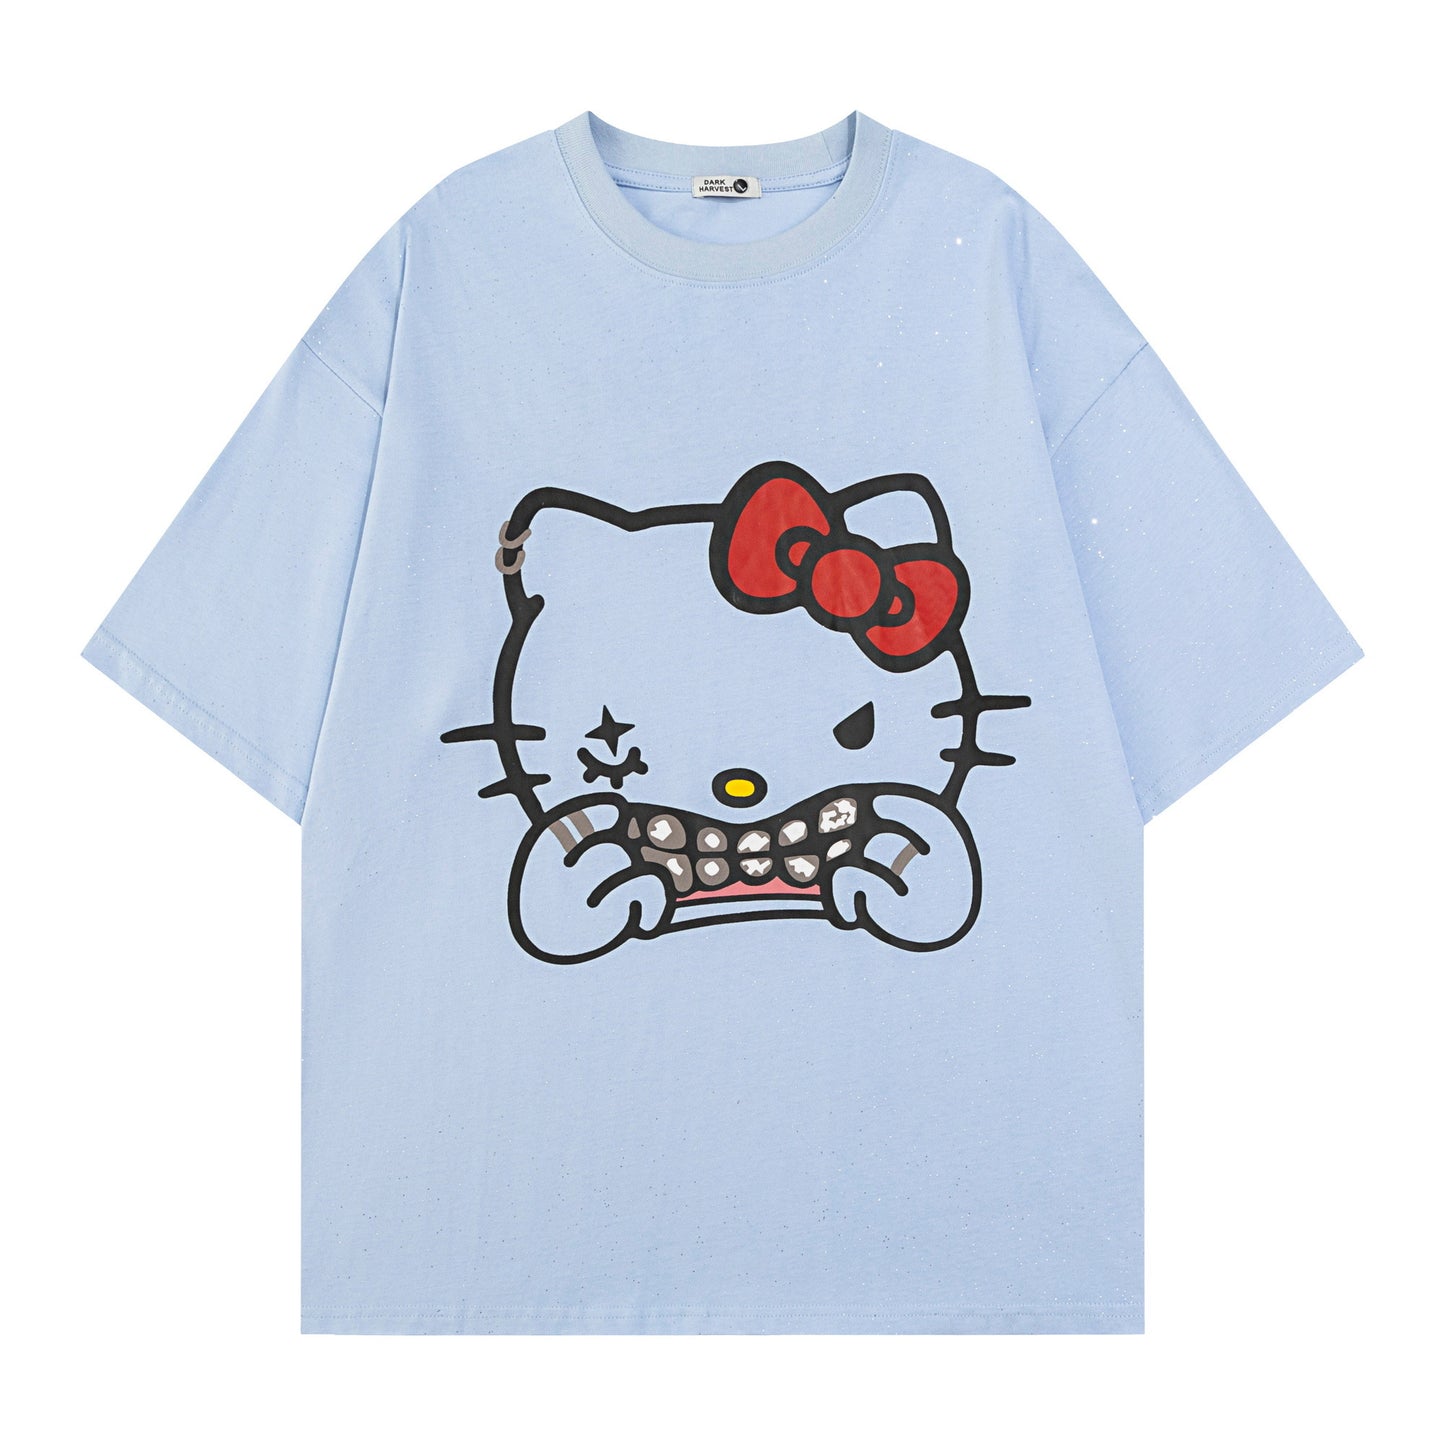 Hellokitty Funny Short Sleeve Tee Casual Summer T Shirt Top